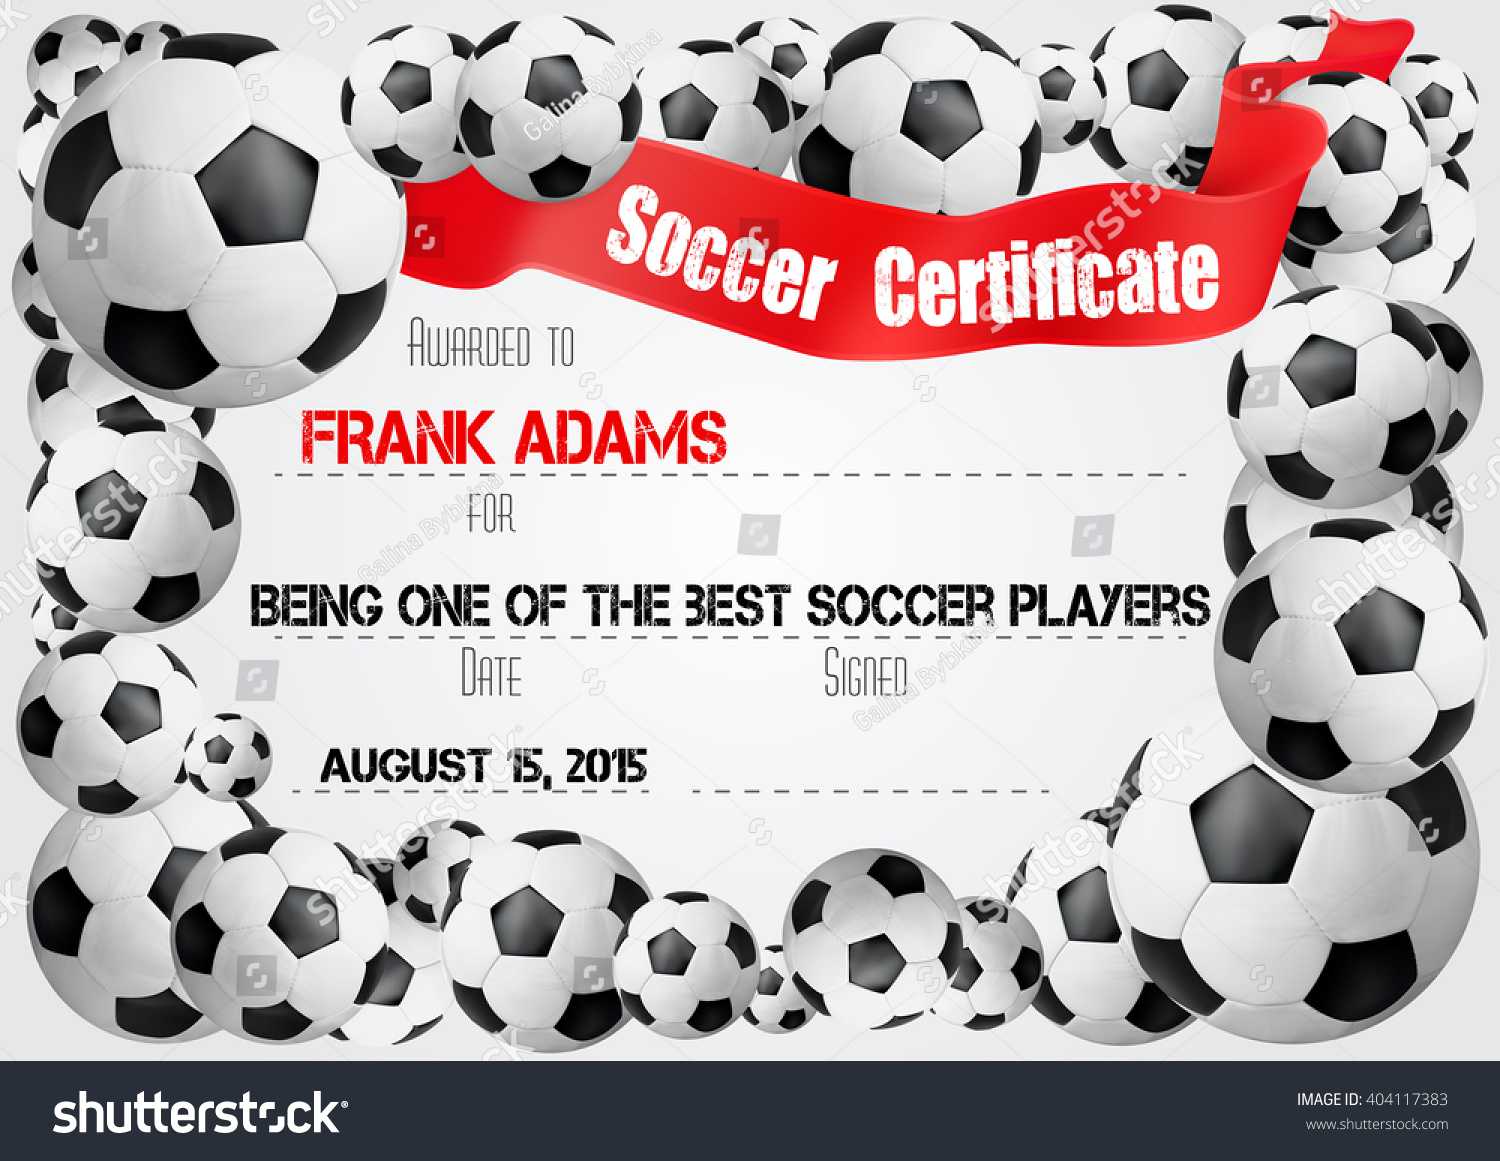 Soccer Certificate Template Football Ball Icons Stock Image Regarding Soccer Certificate Template Free